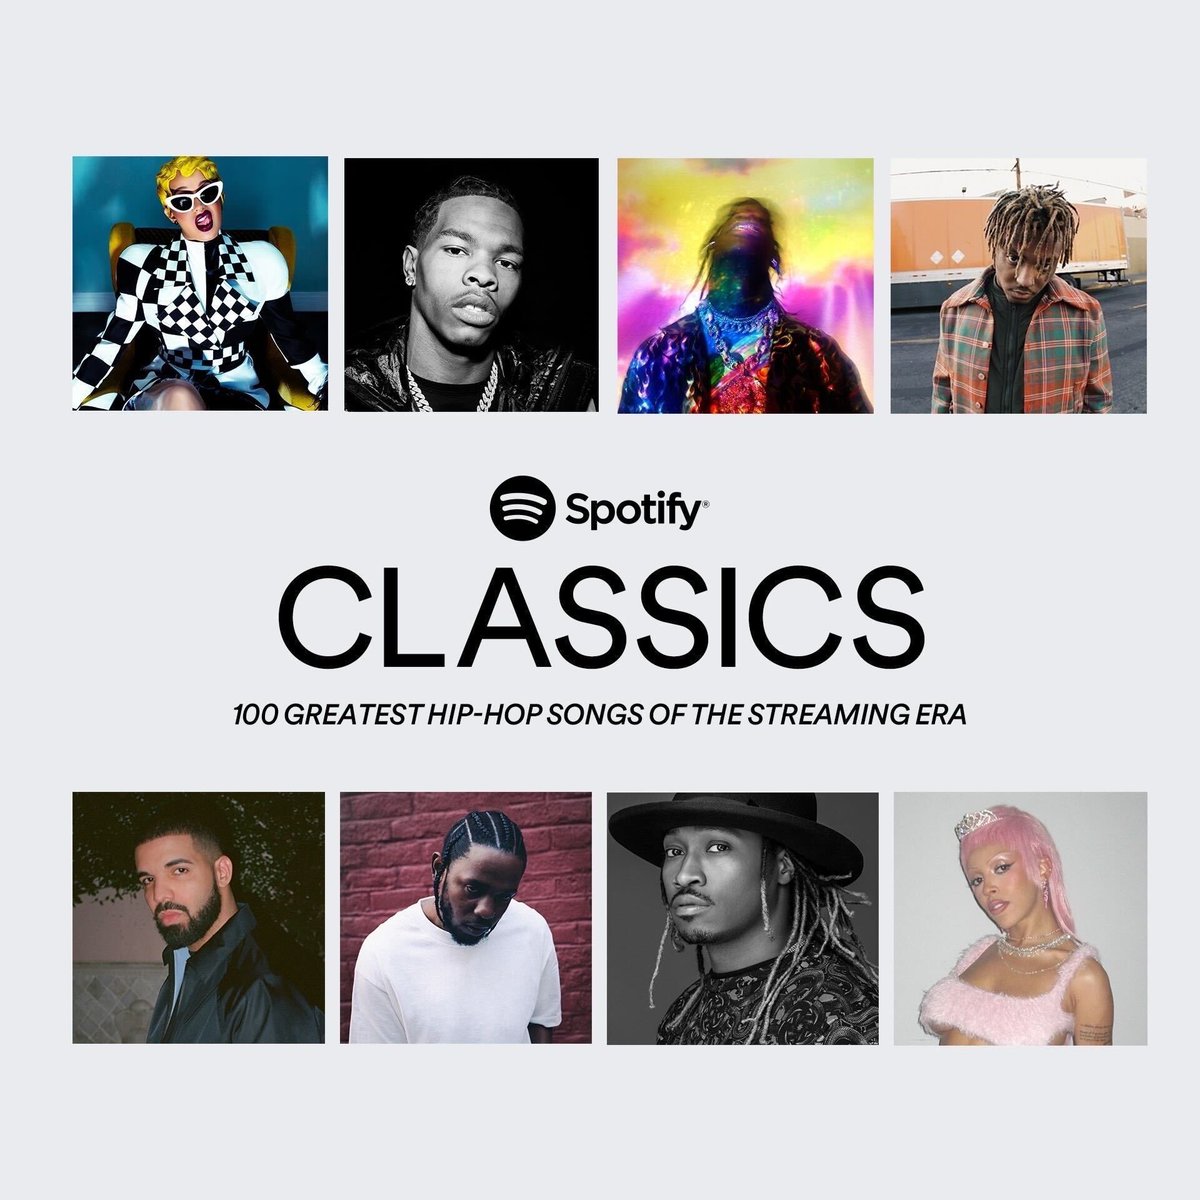 Our top 10 of 100 greatest hip-hop songs of the streaming era #SpotifyCLASSICS 1. Kendrick Lamar – “Alright” 2. Cardi B – “Bodak Yellow” 3. Drake – “God’s Plan” 4. Lil Uzi Vert – “XO Tour Llif3” 5. Future – “March Madness” 6. Migos ft. Lil Uzi Vert – “Bad and Boujee” 7. Travis